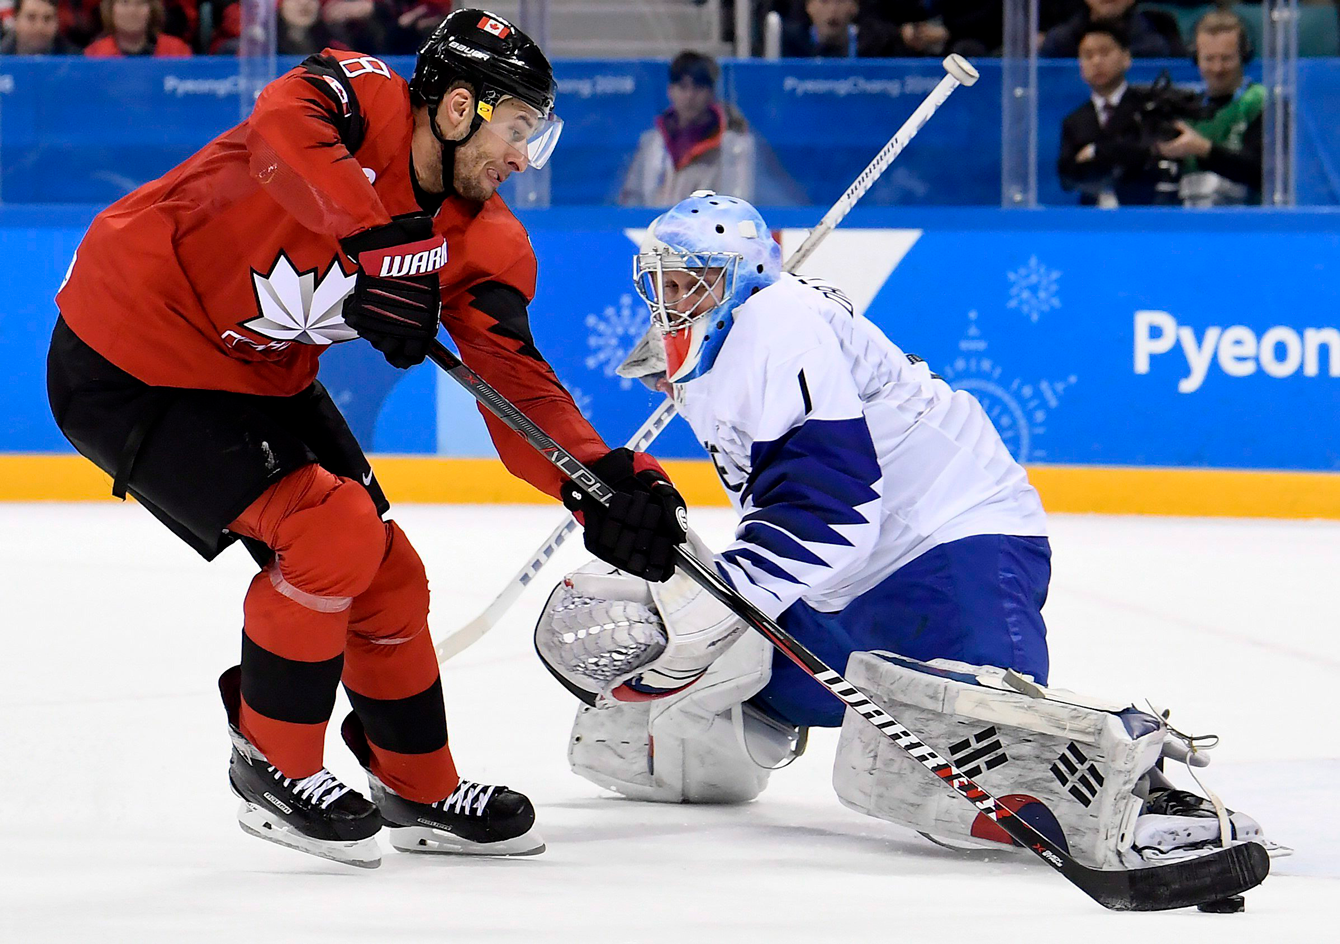 Team Canada South Koreaa Ice Hockey PyeongChang 2018